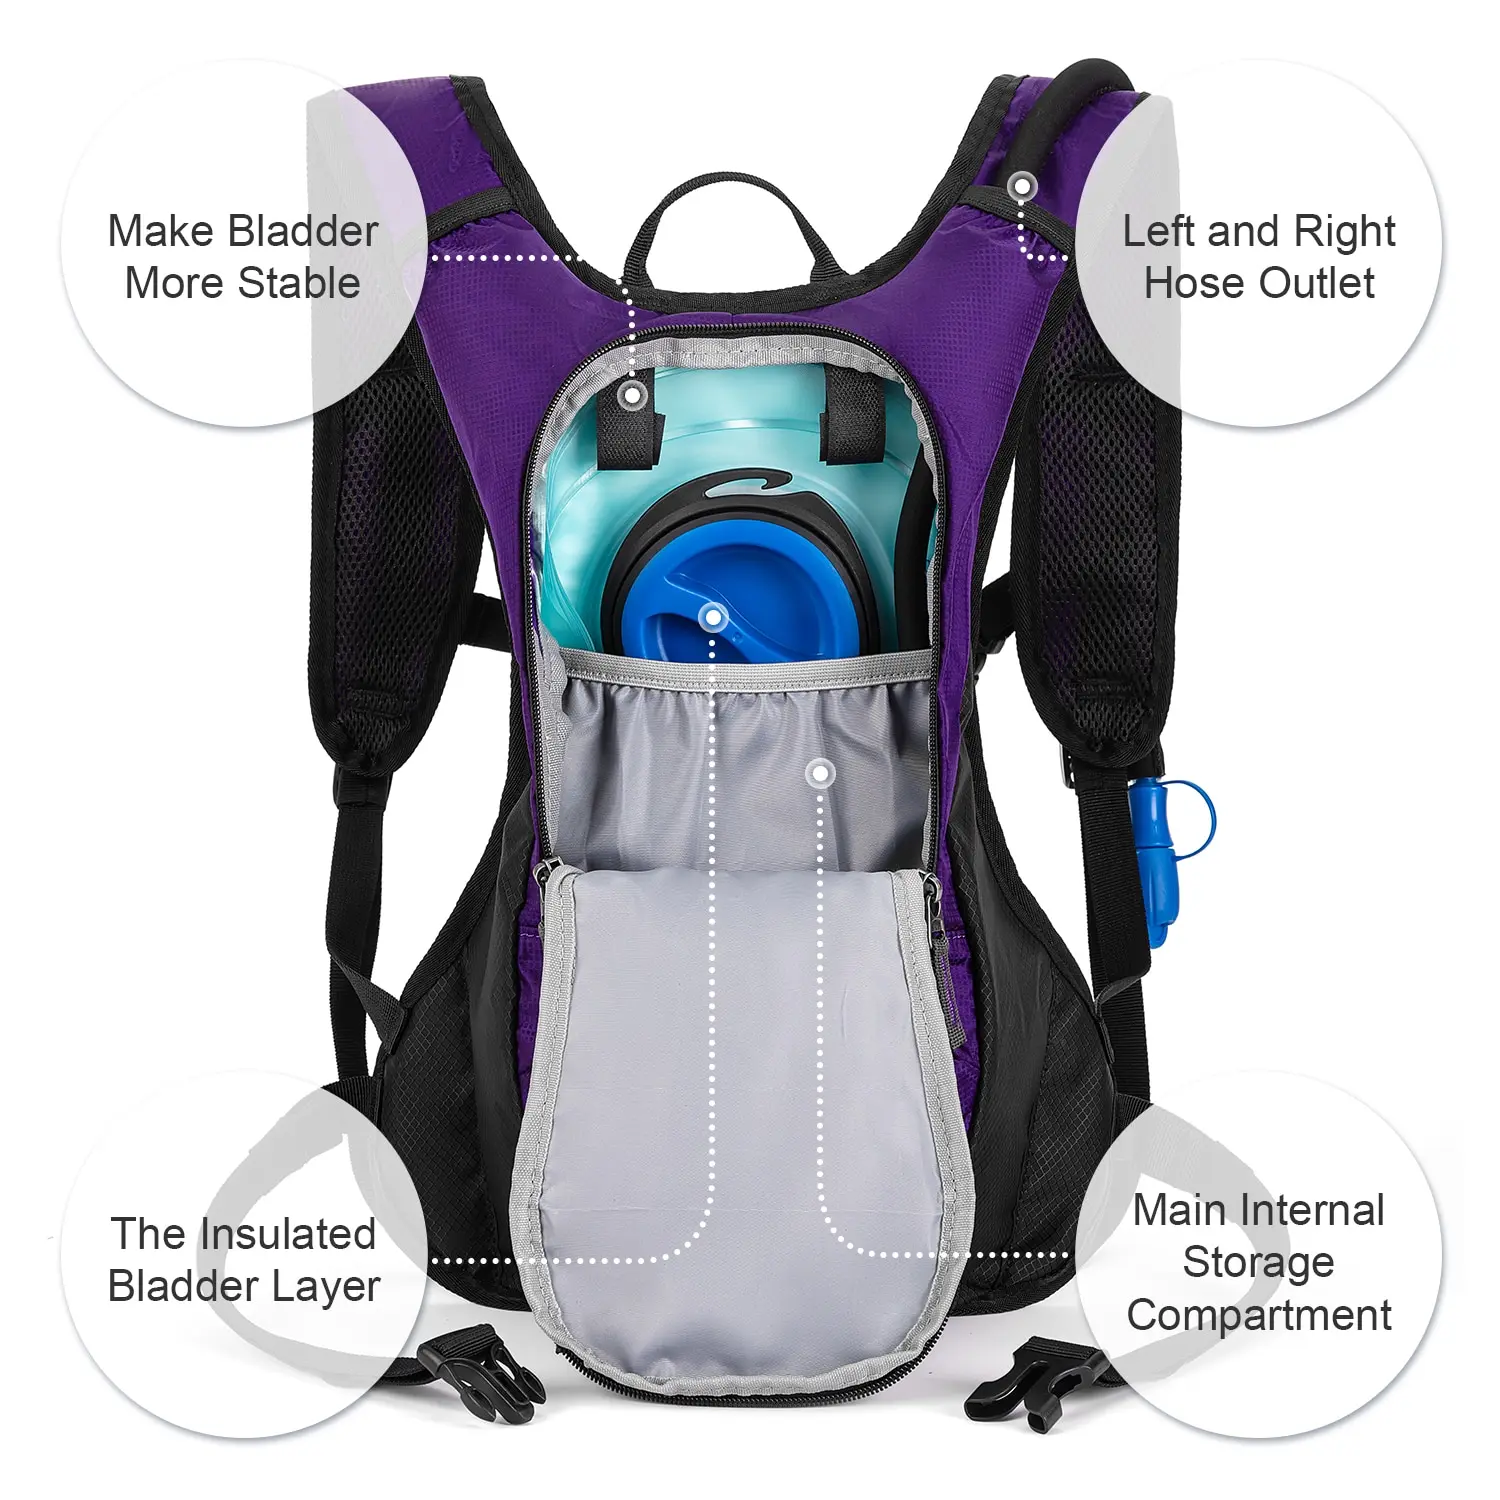 1pc Ultralight Running Hydration Backpacks 2L Water Bag Bladder